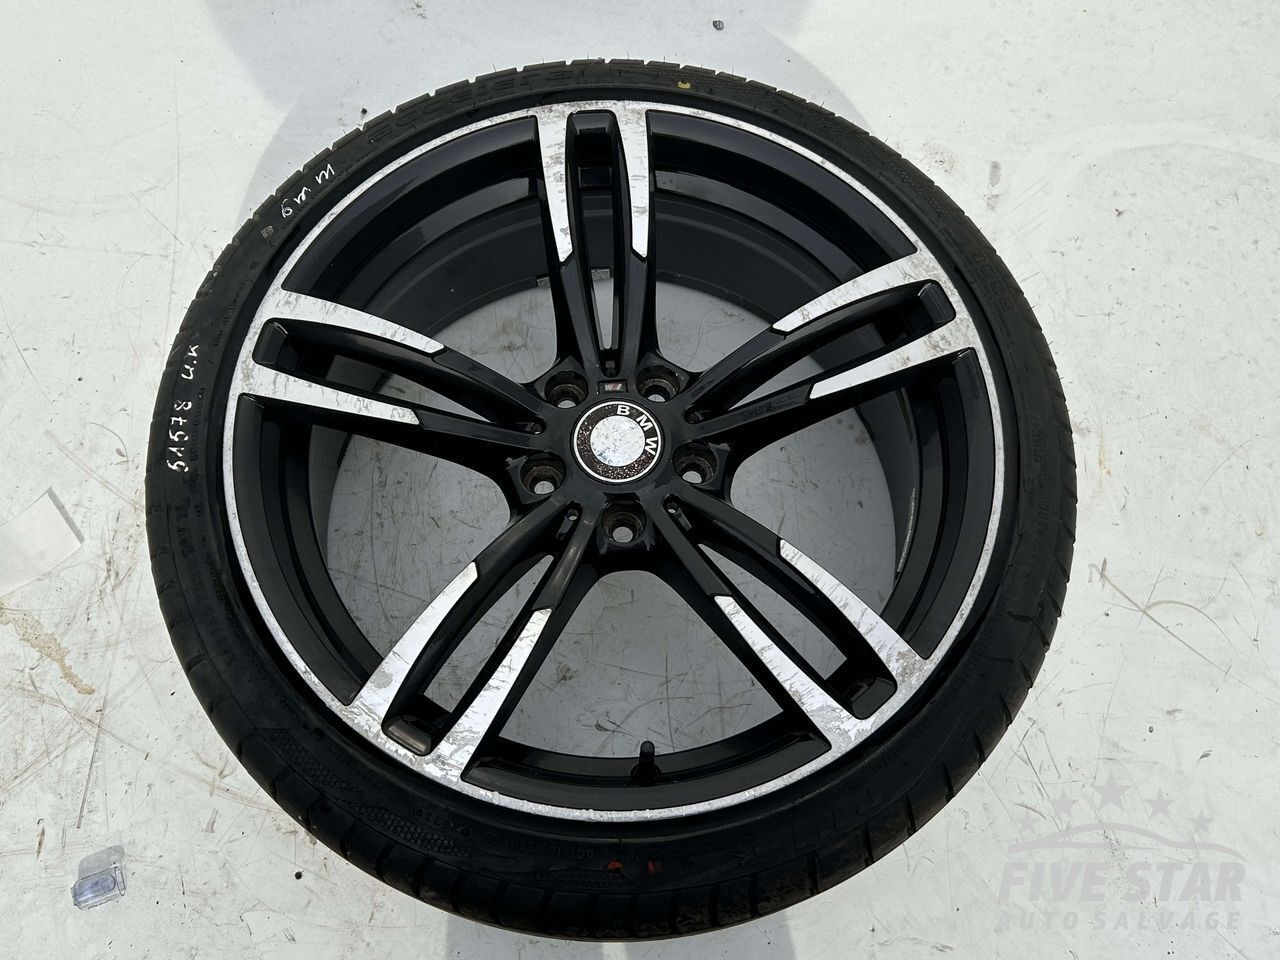 BMW 5 Series R20 Alloy Wheel With Tire 2011 Hatchback 4/5dr (09-12) Diesel 530d